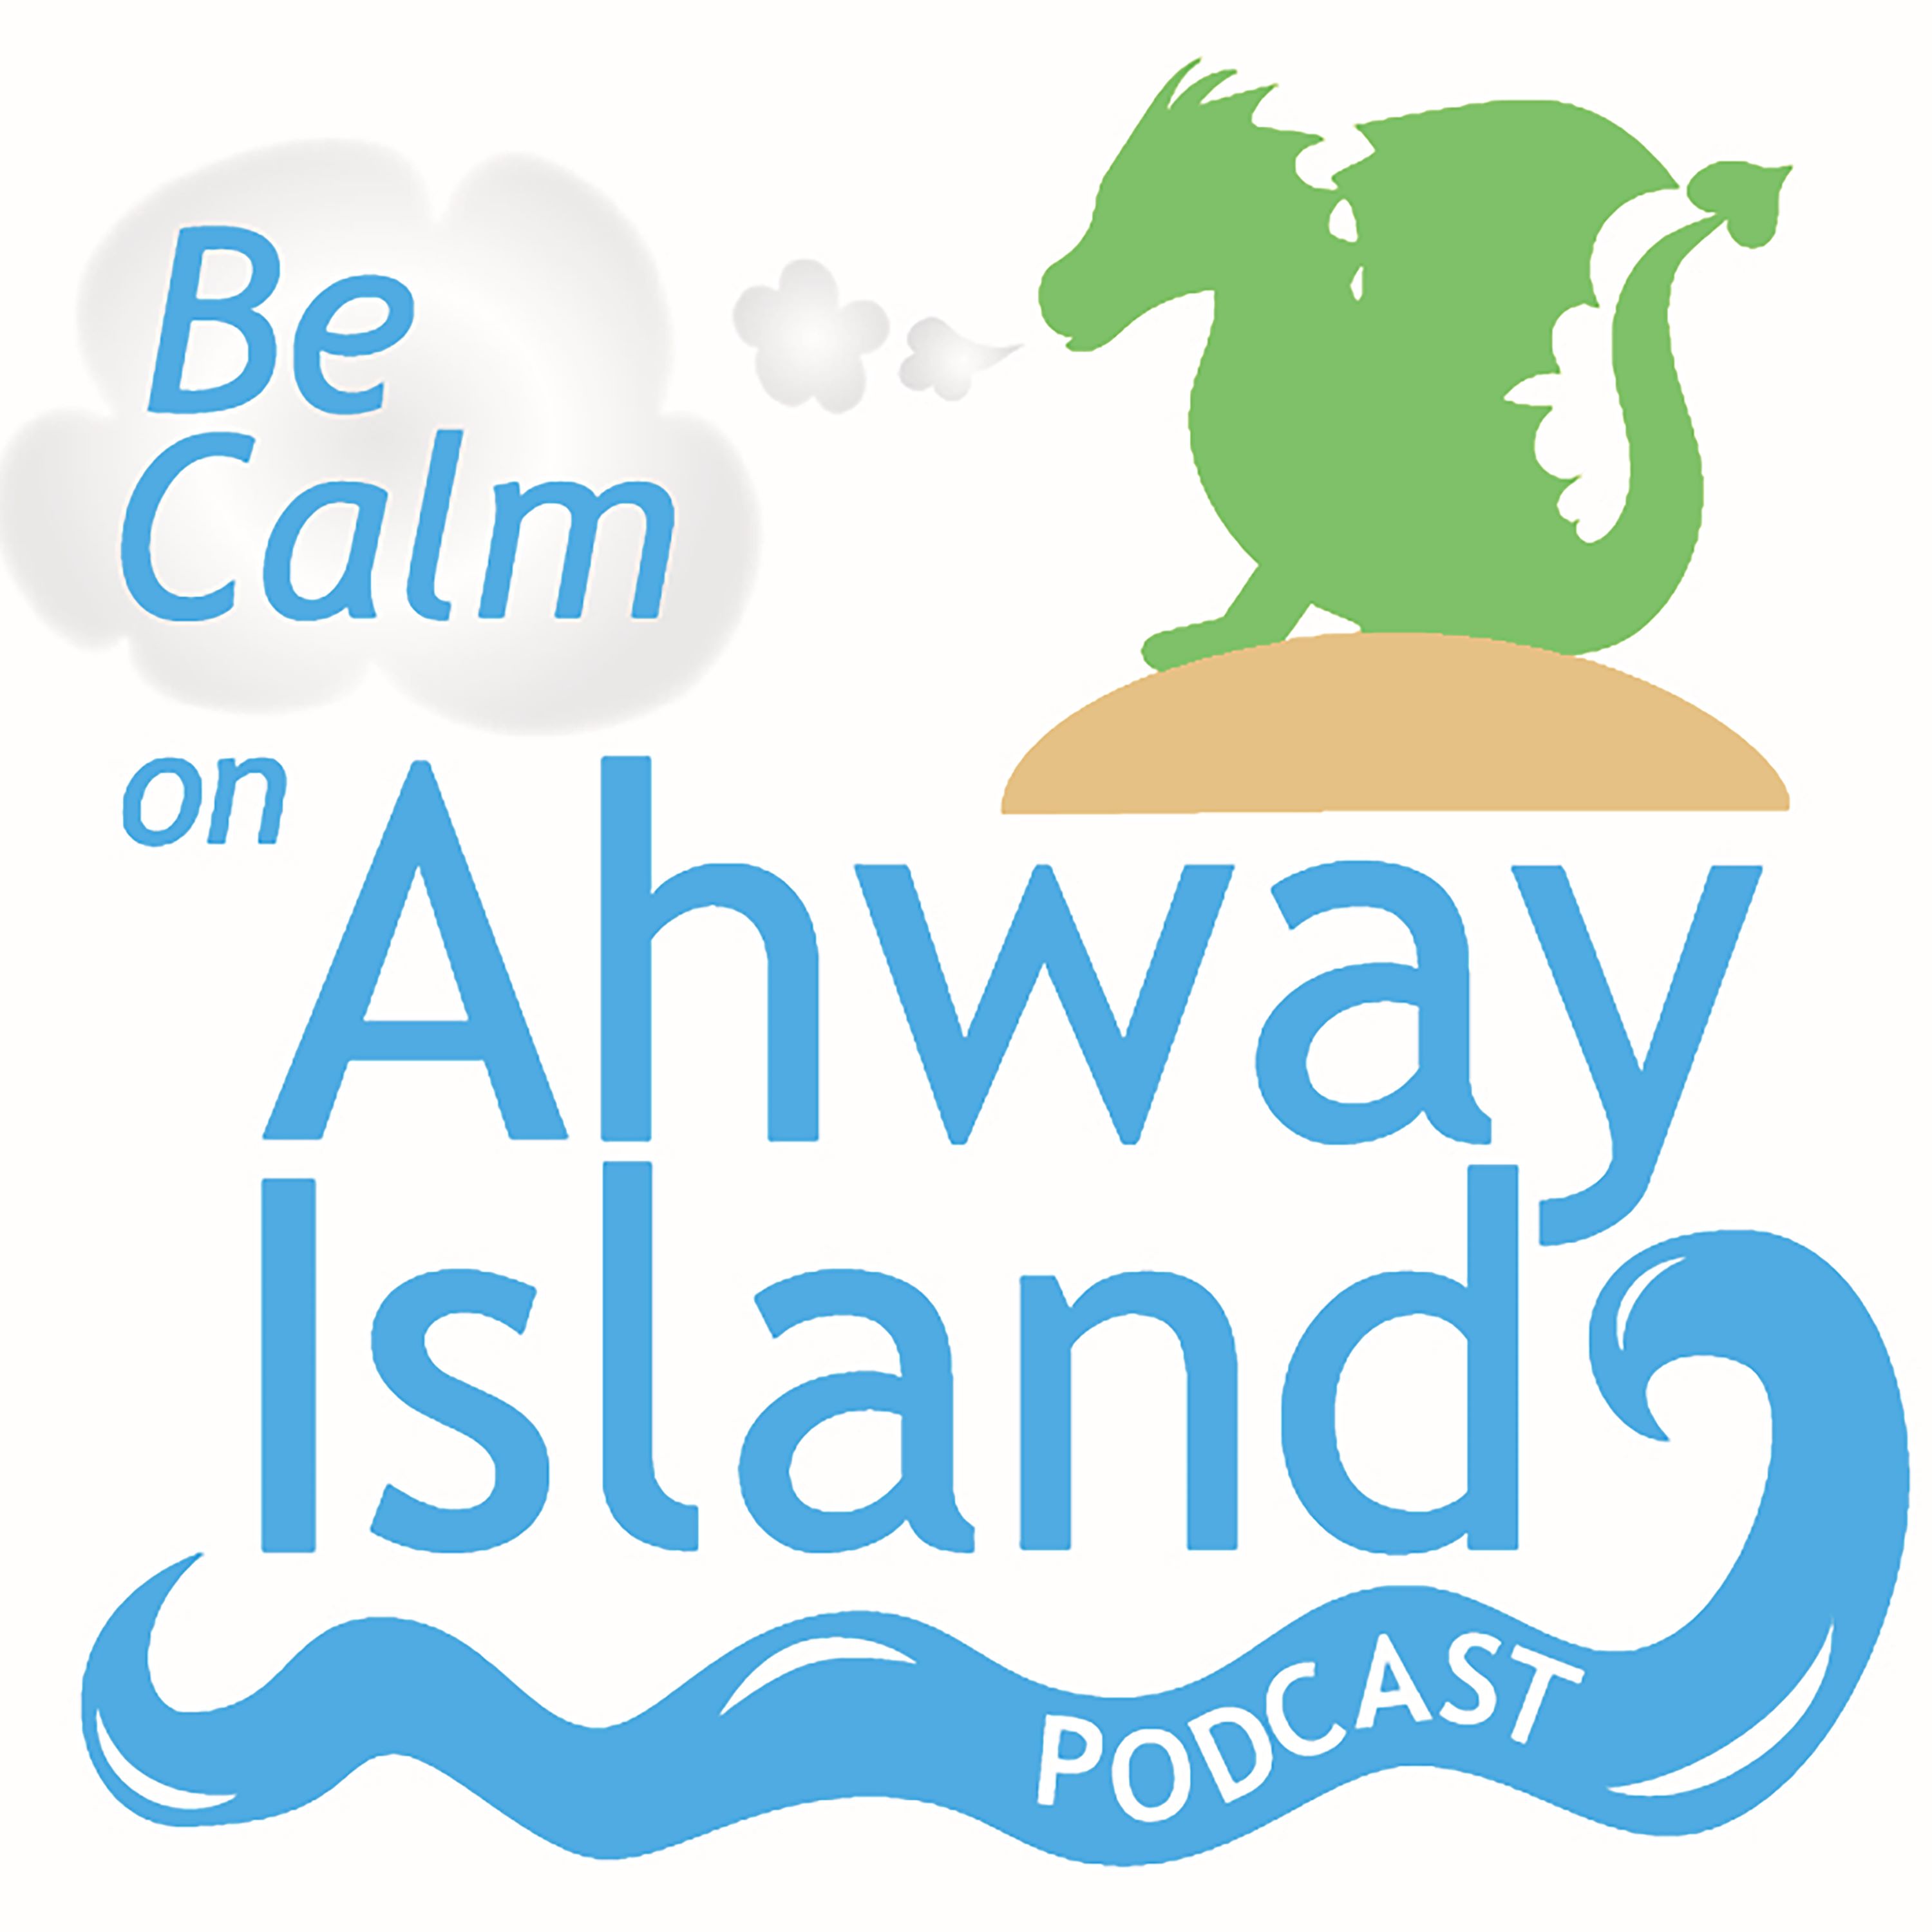 Ahway Island